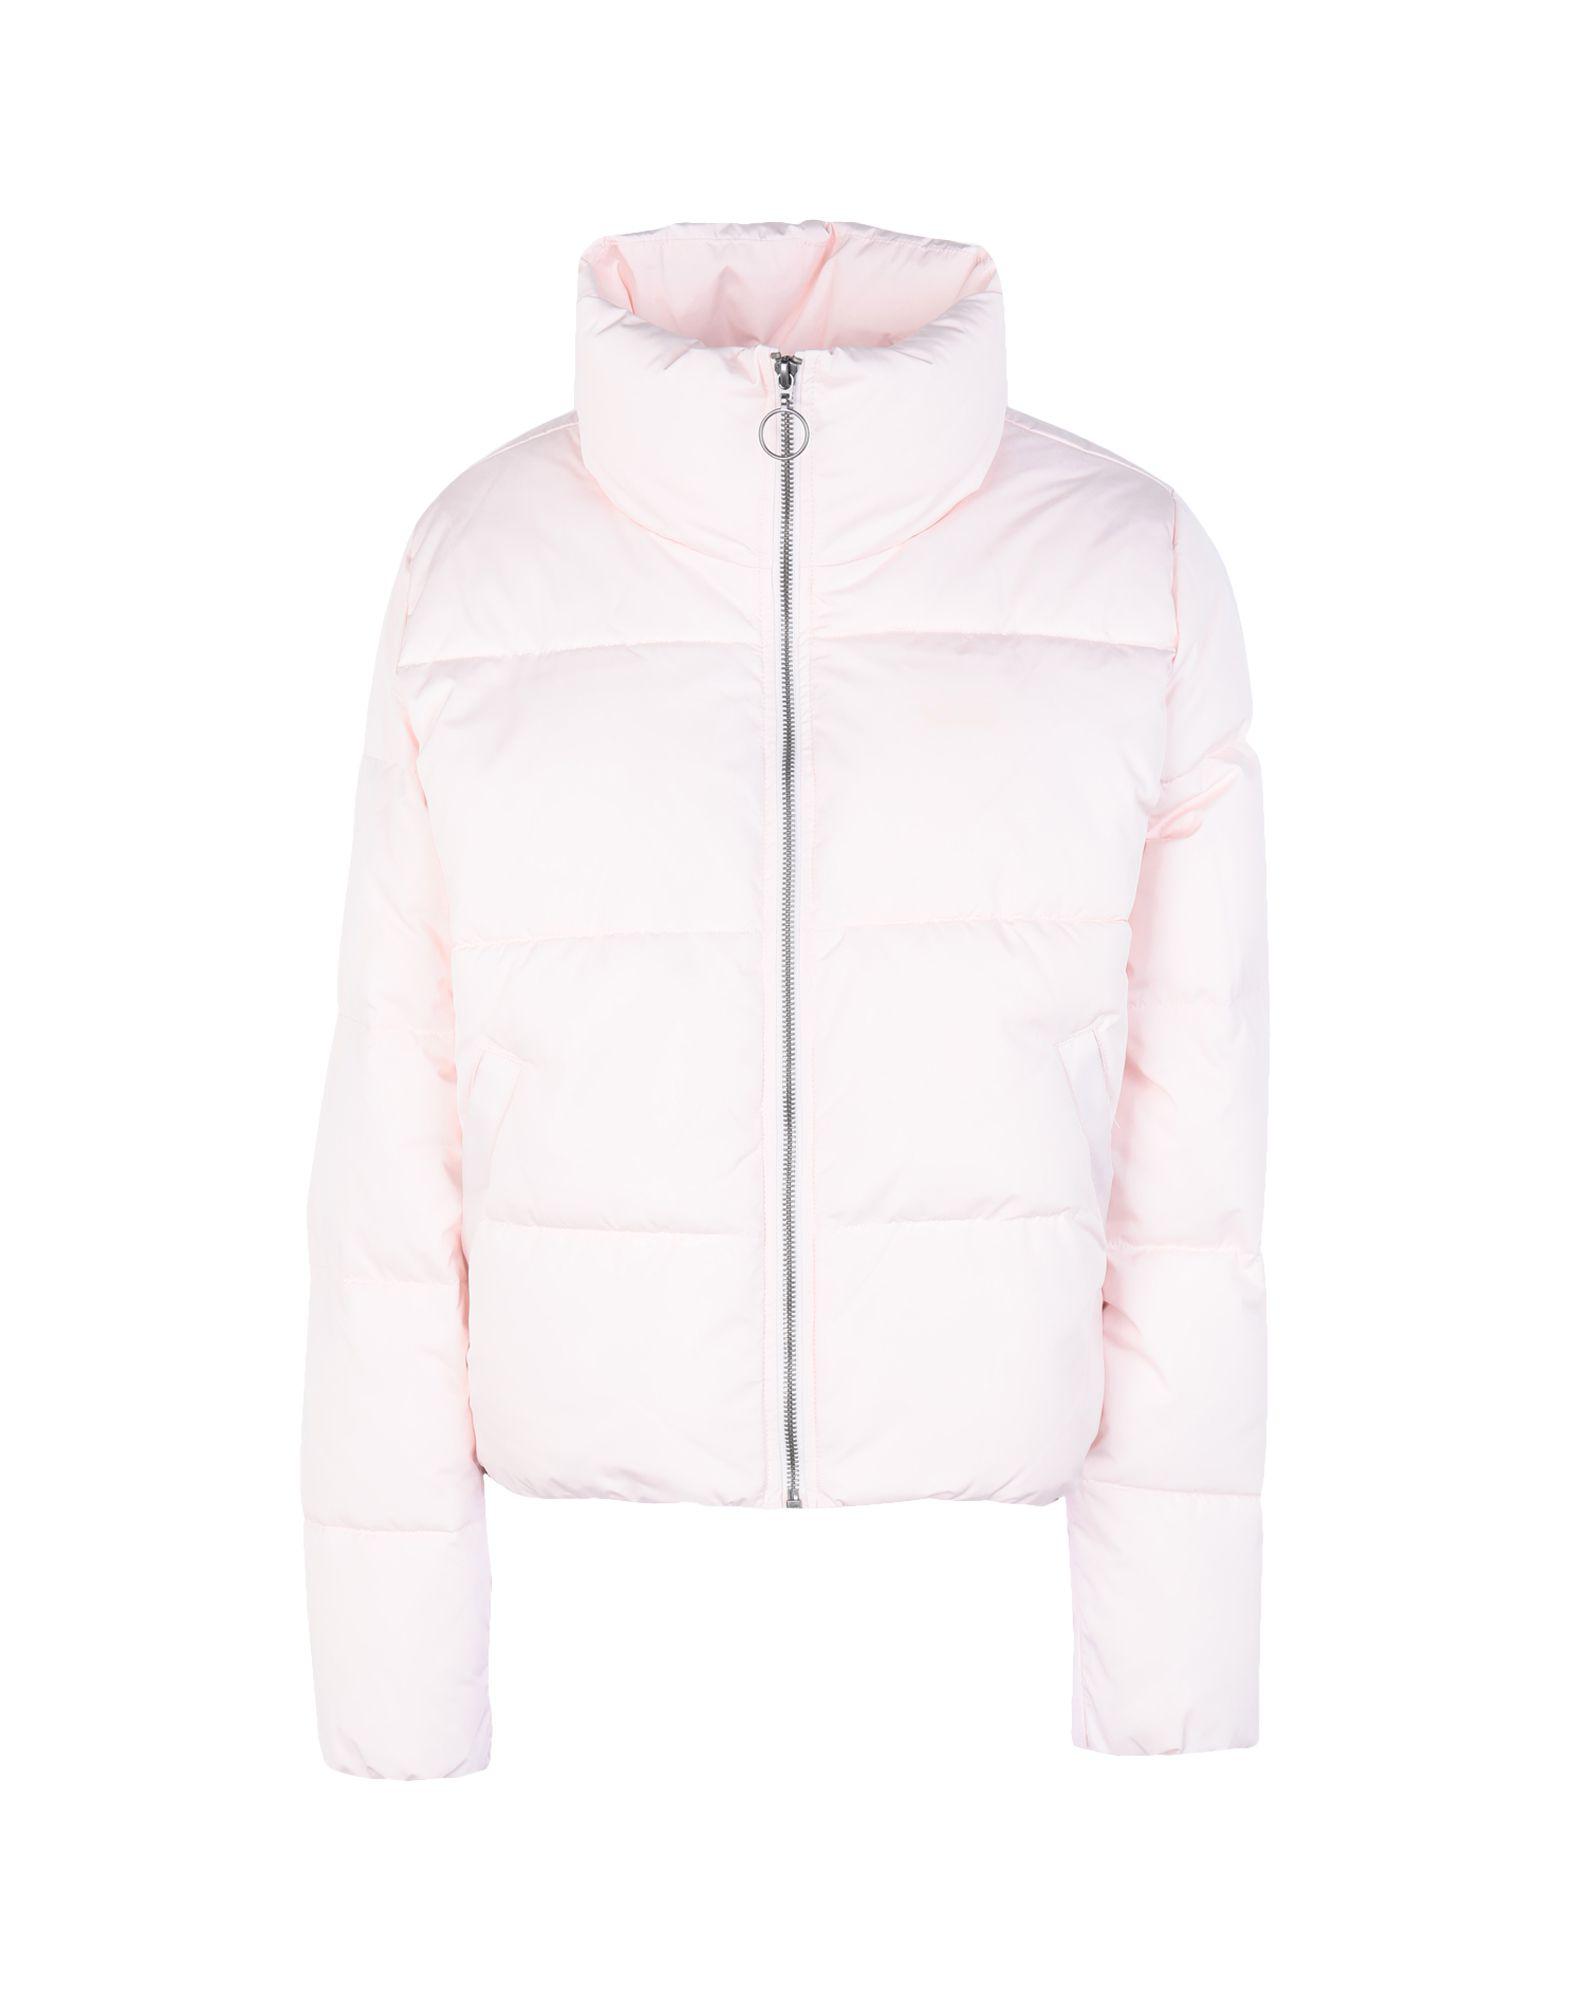 light pink vans jacket